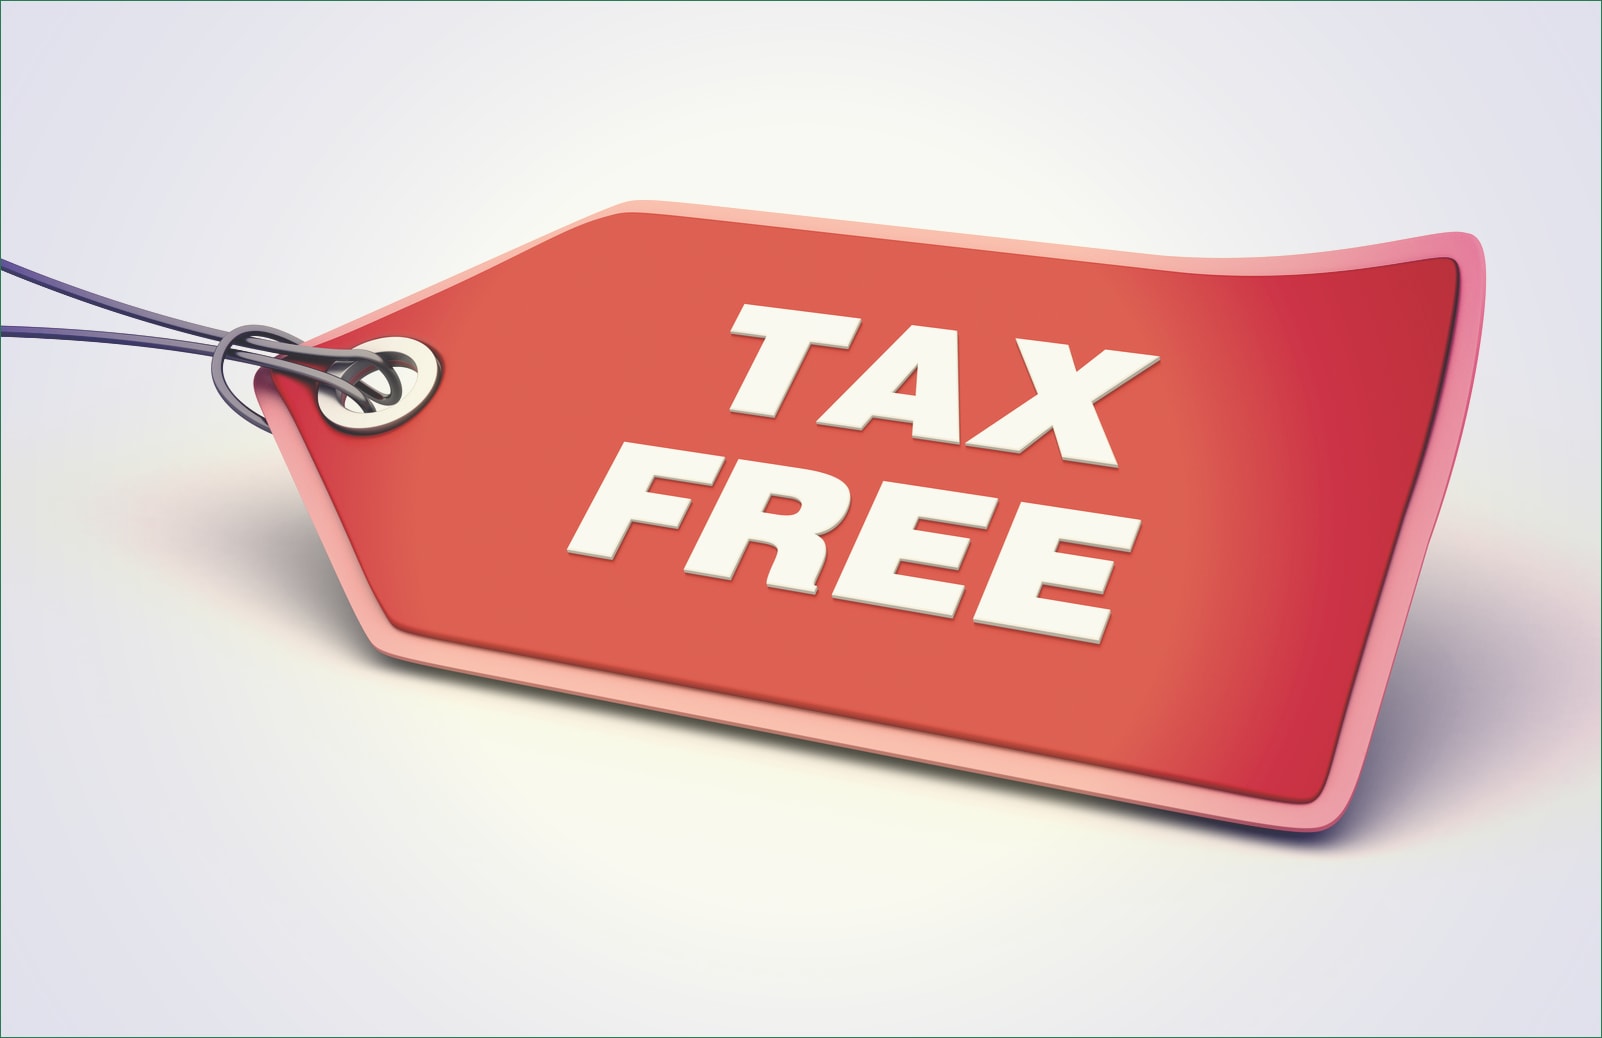 tax free price tag